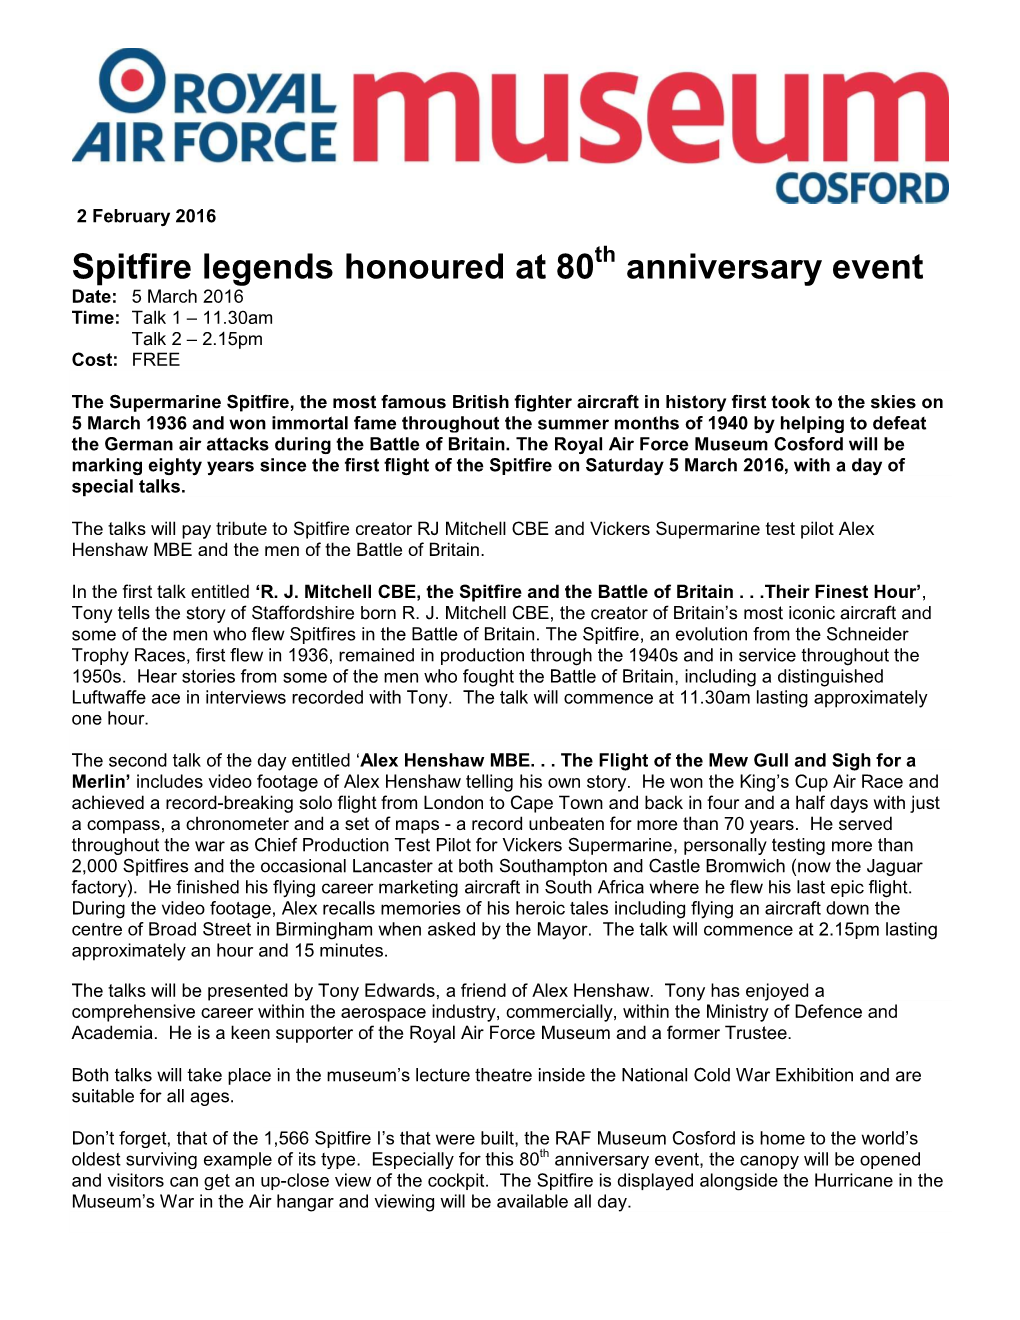 Spitfire Legends Honoured at 80 Anniversary Event